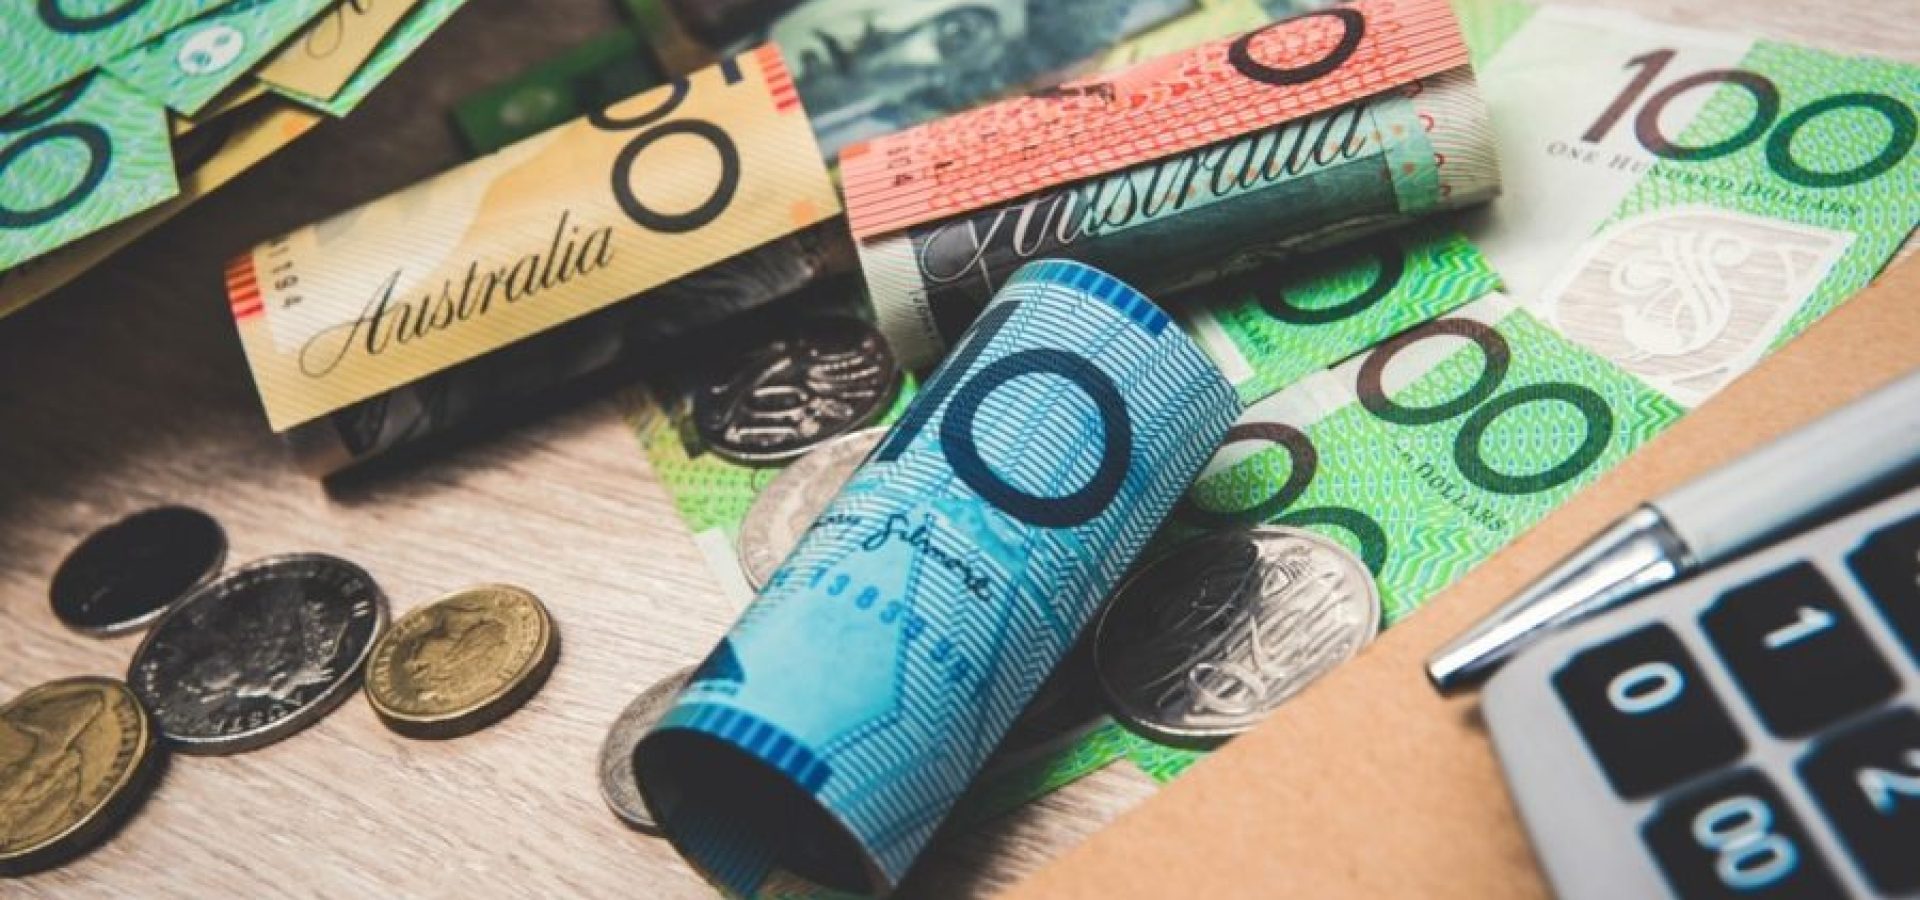 Australlian and New Zealand dollars